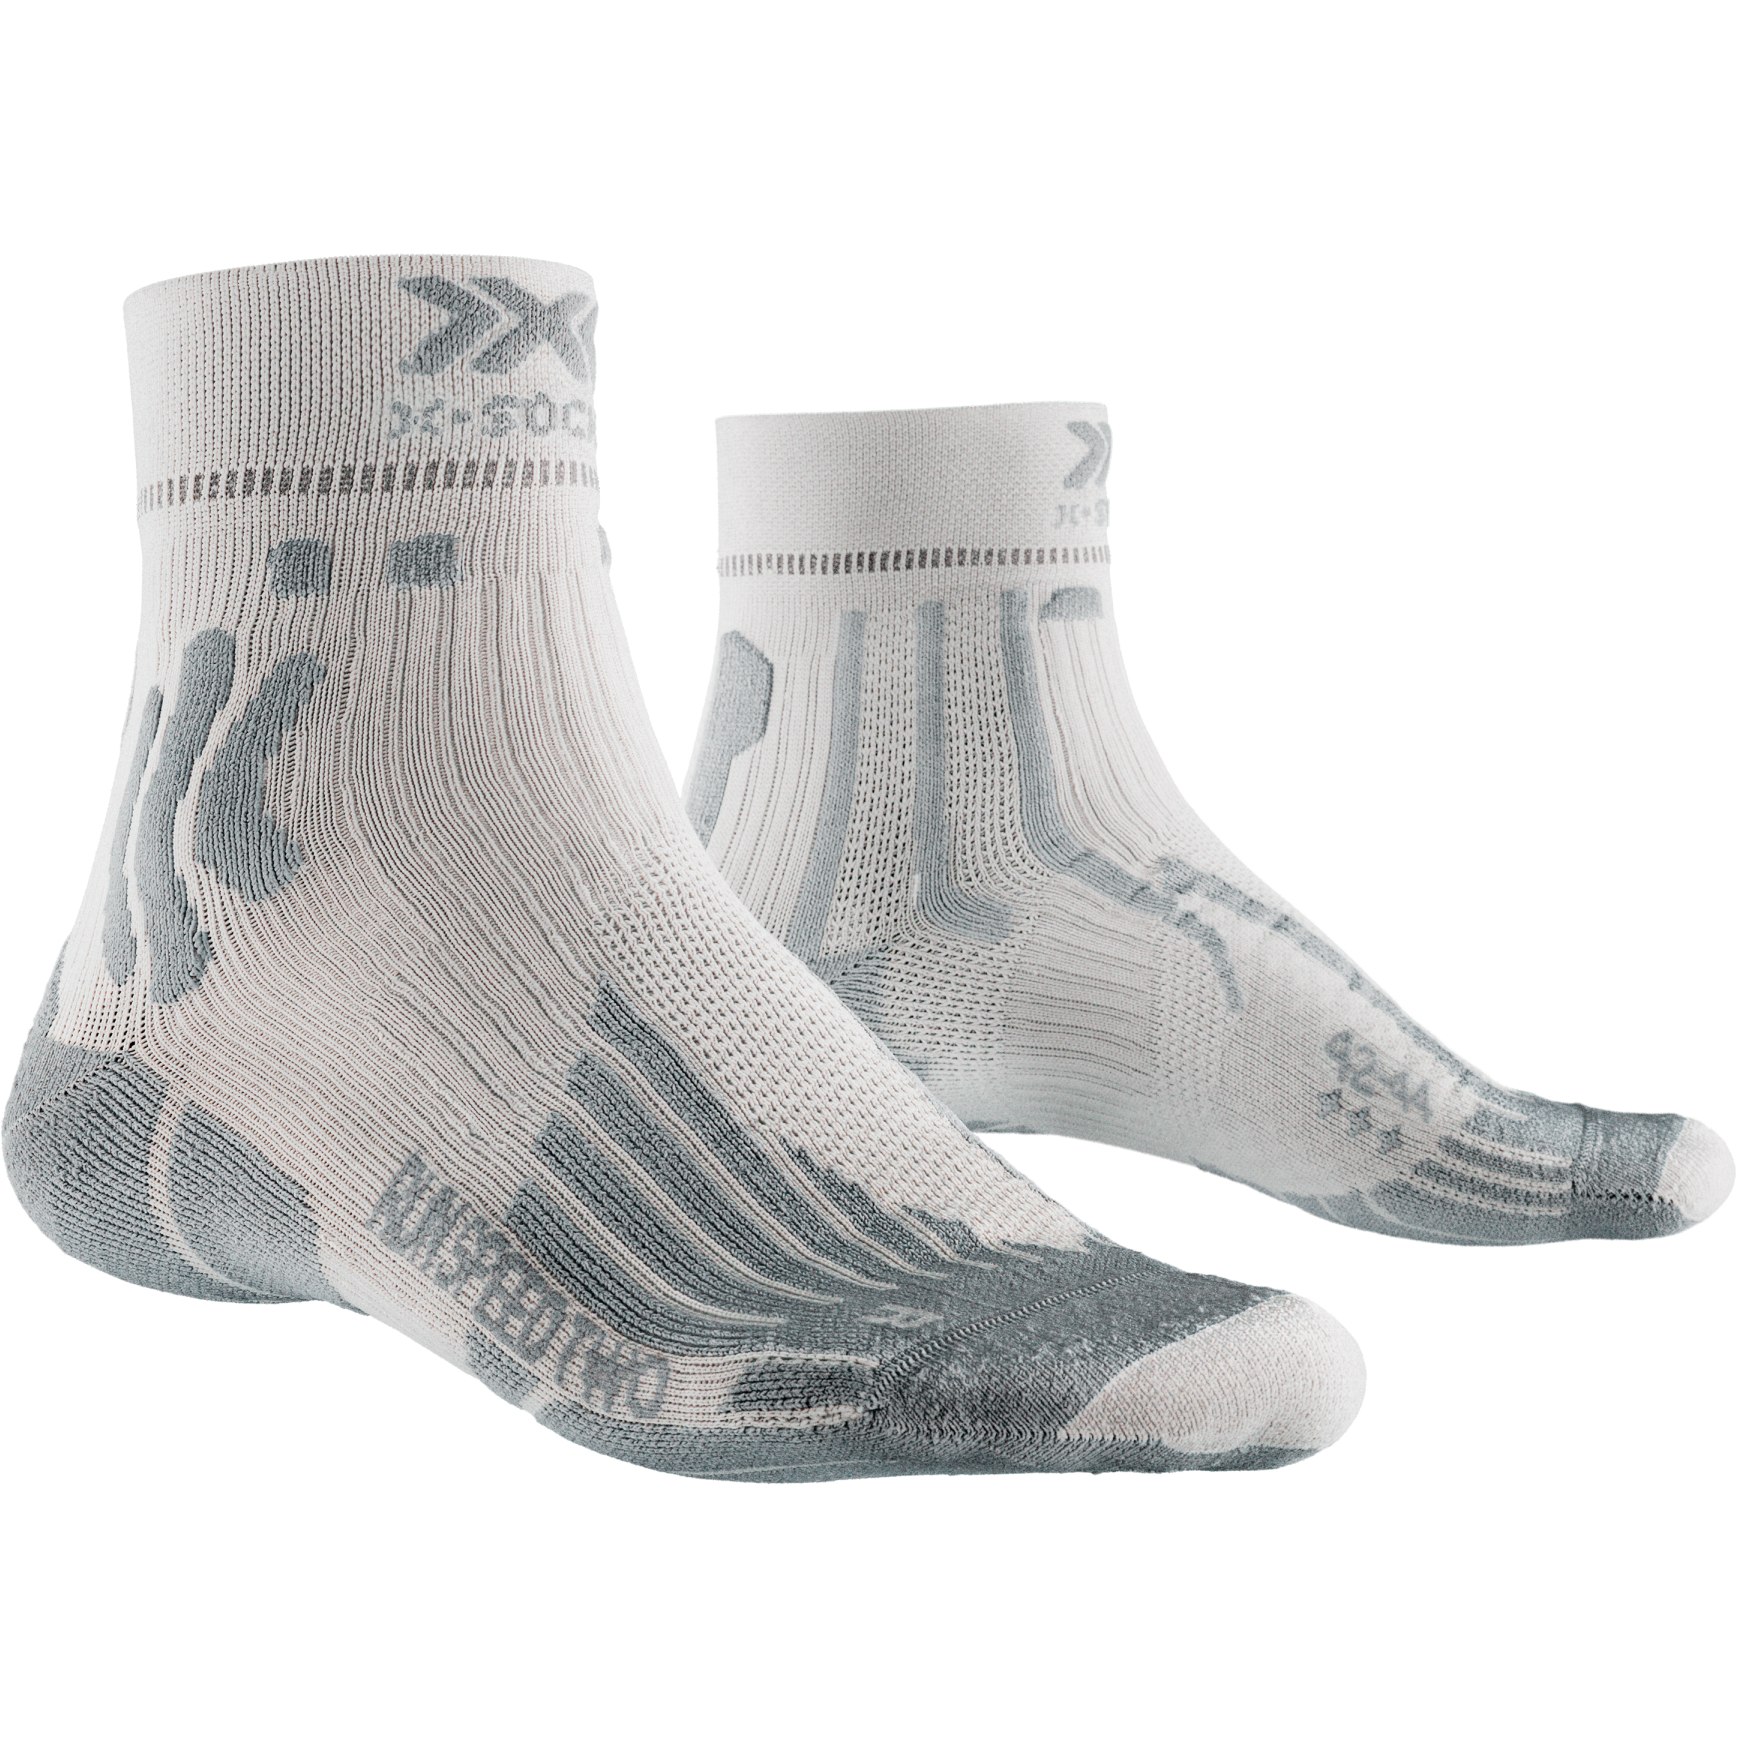 Produktbild von X-Socks Run Speed Two 4.0 Laufsocken - light charcoal/pearl grey